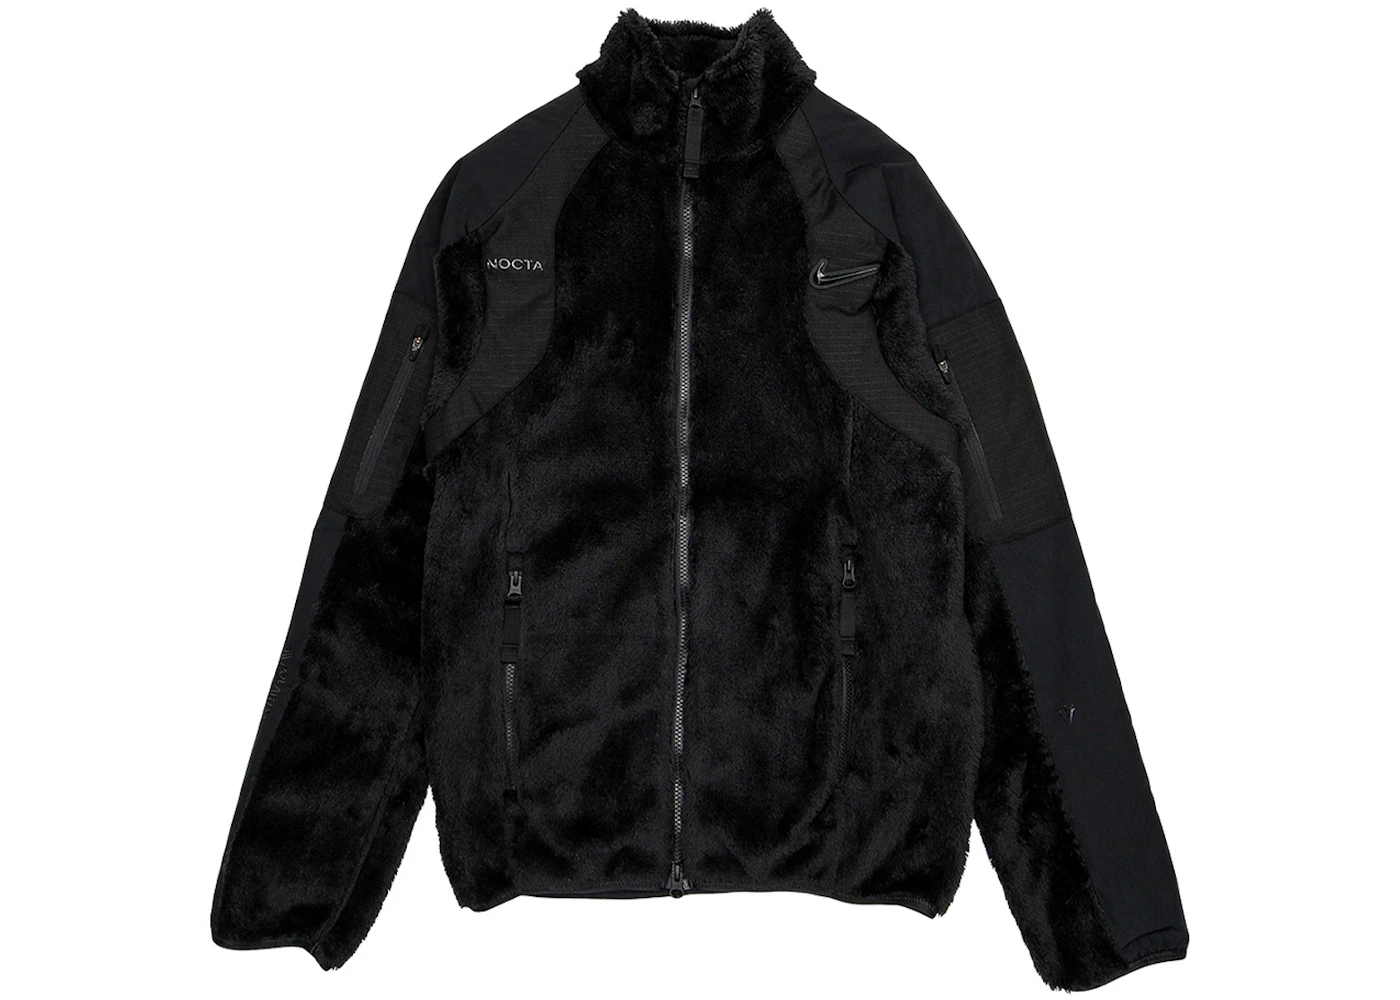 Nike x Drake NOCTA Polar Fleece Jacket Black Men's - SS21 - US